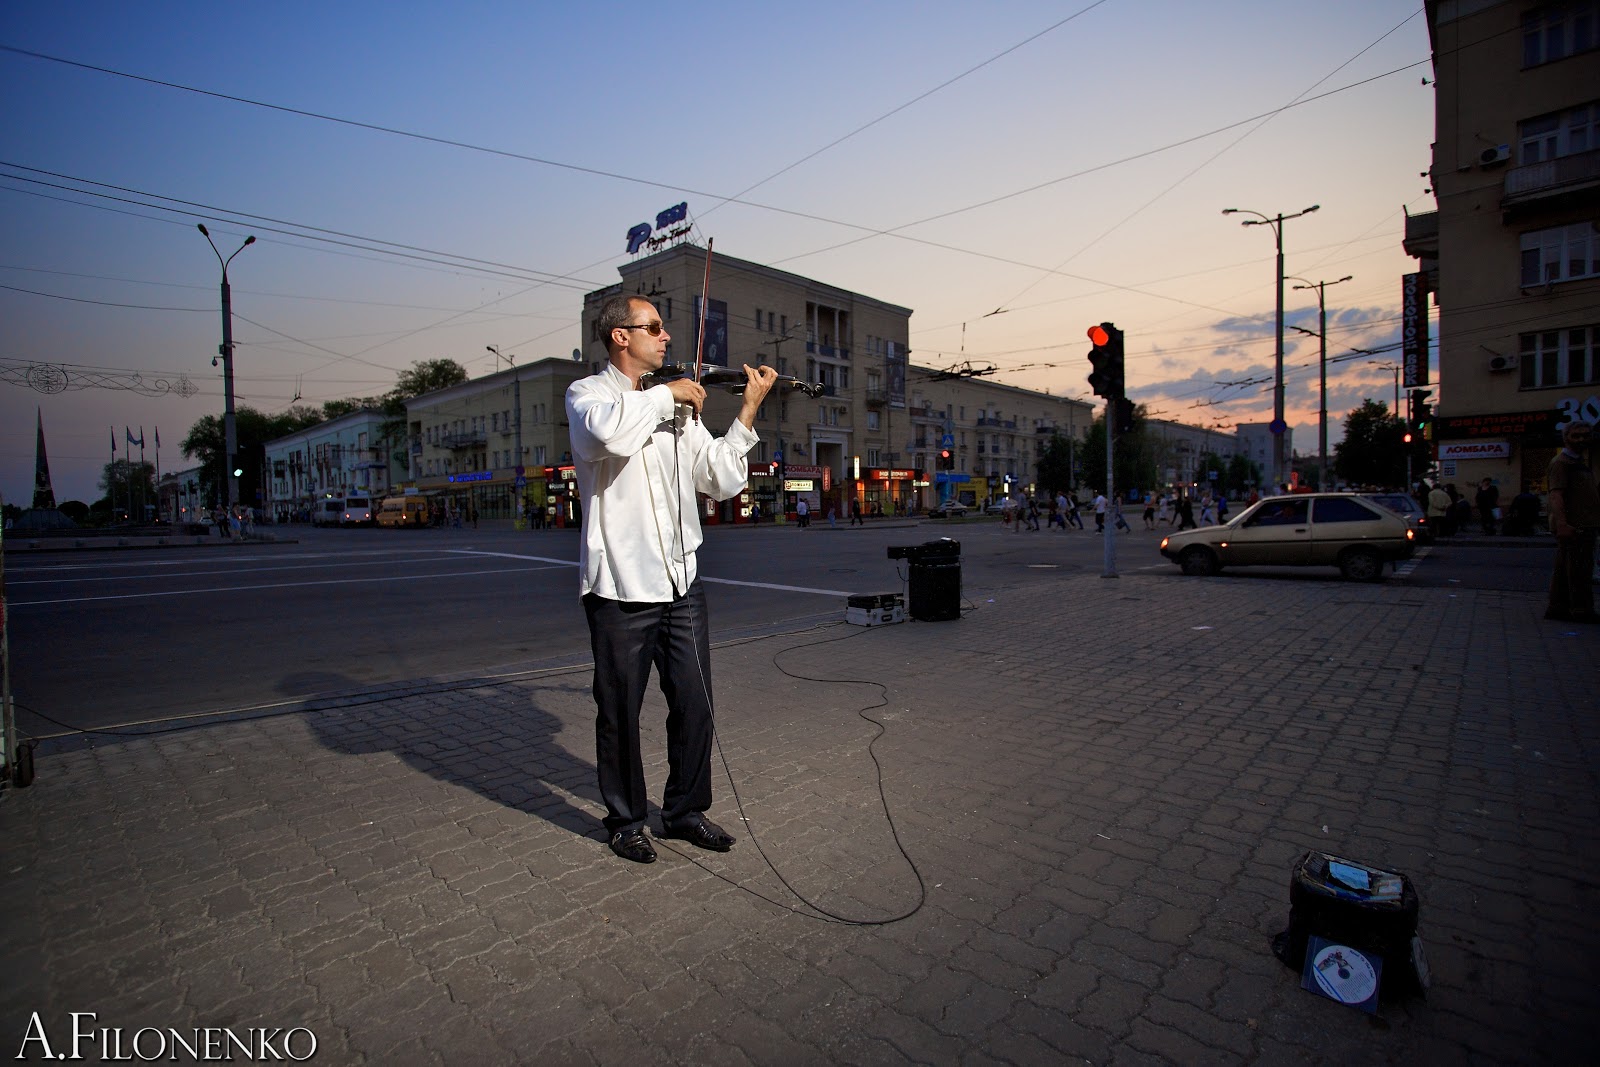 Музыка на улице ночью. Музыканты на улице Украины. Музыкальная улица. Музыка на улице. Музыка на улице картинка.